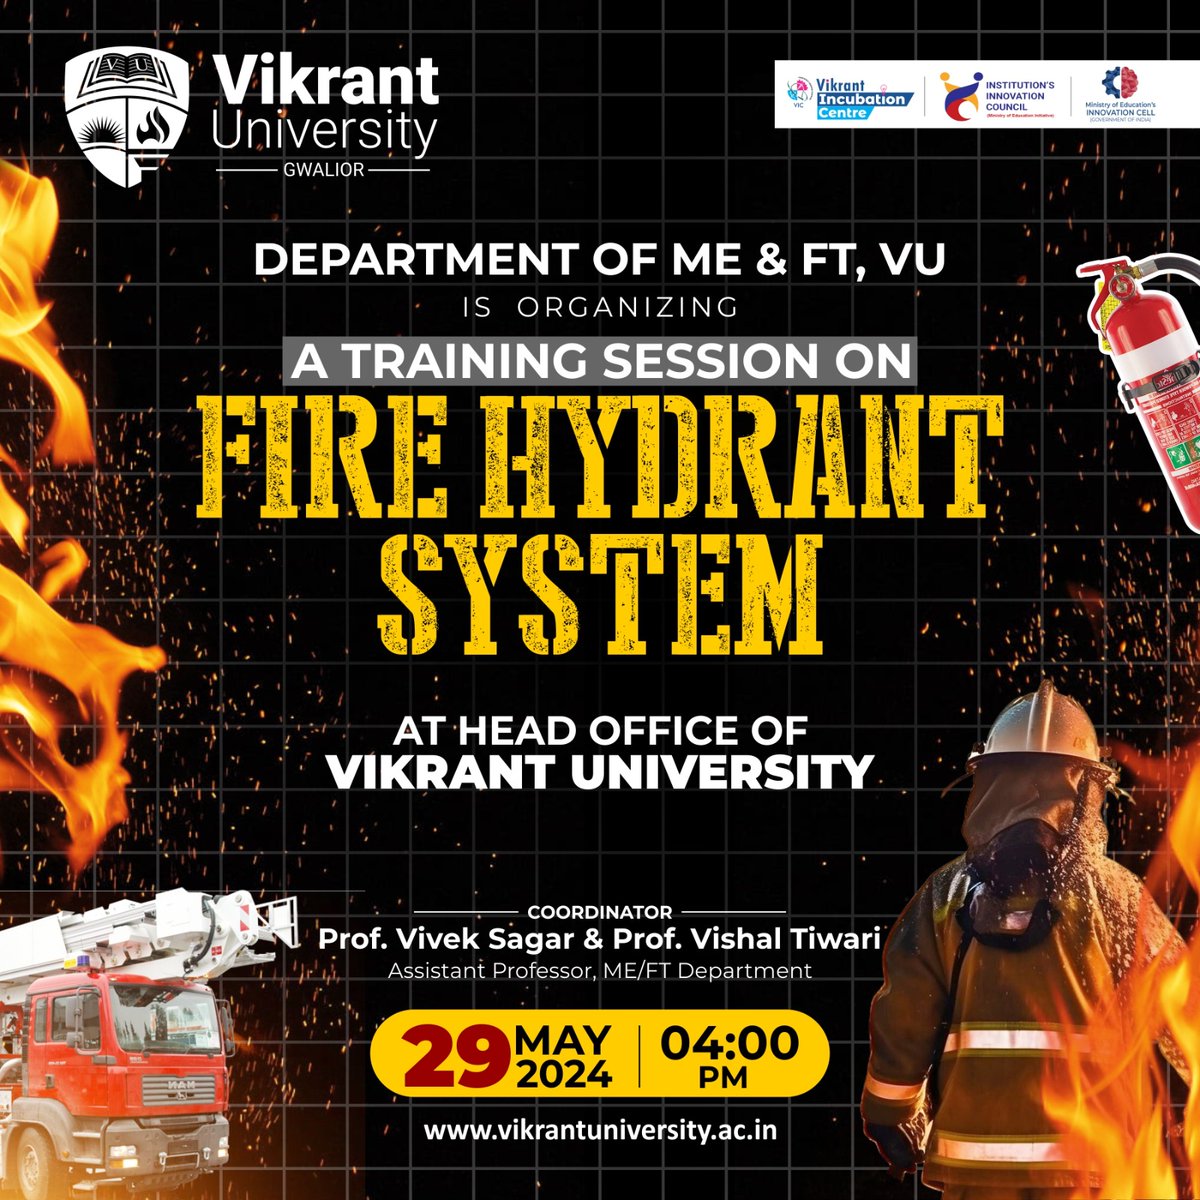 #VikrantUniversity #VikrantGroupofInstitutions #Gwalior #Indore #MadhyaPradesh #India #FireHydrantSystem #FireSafety #FireSafetyAwareness #FireSafetyEngineering #Training